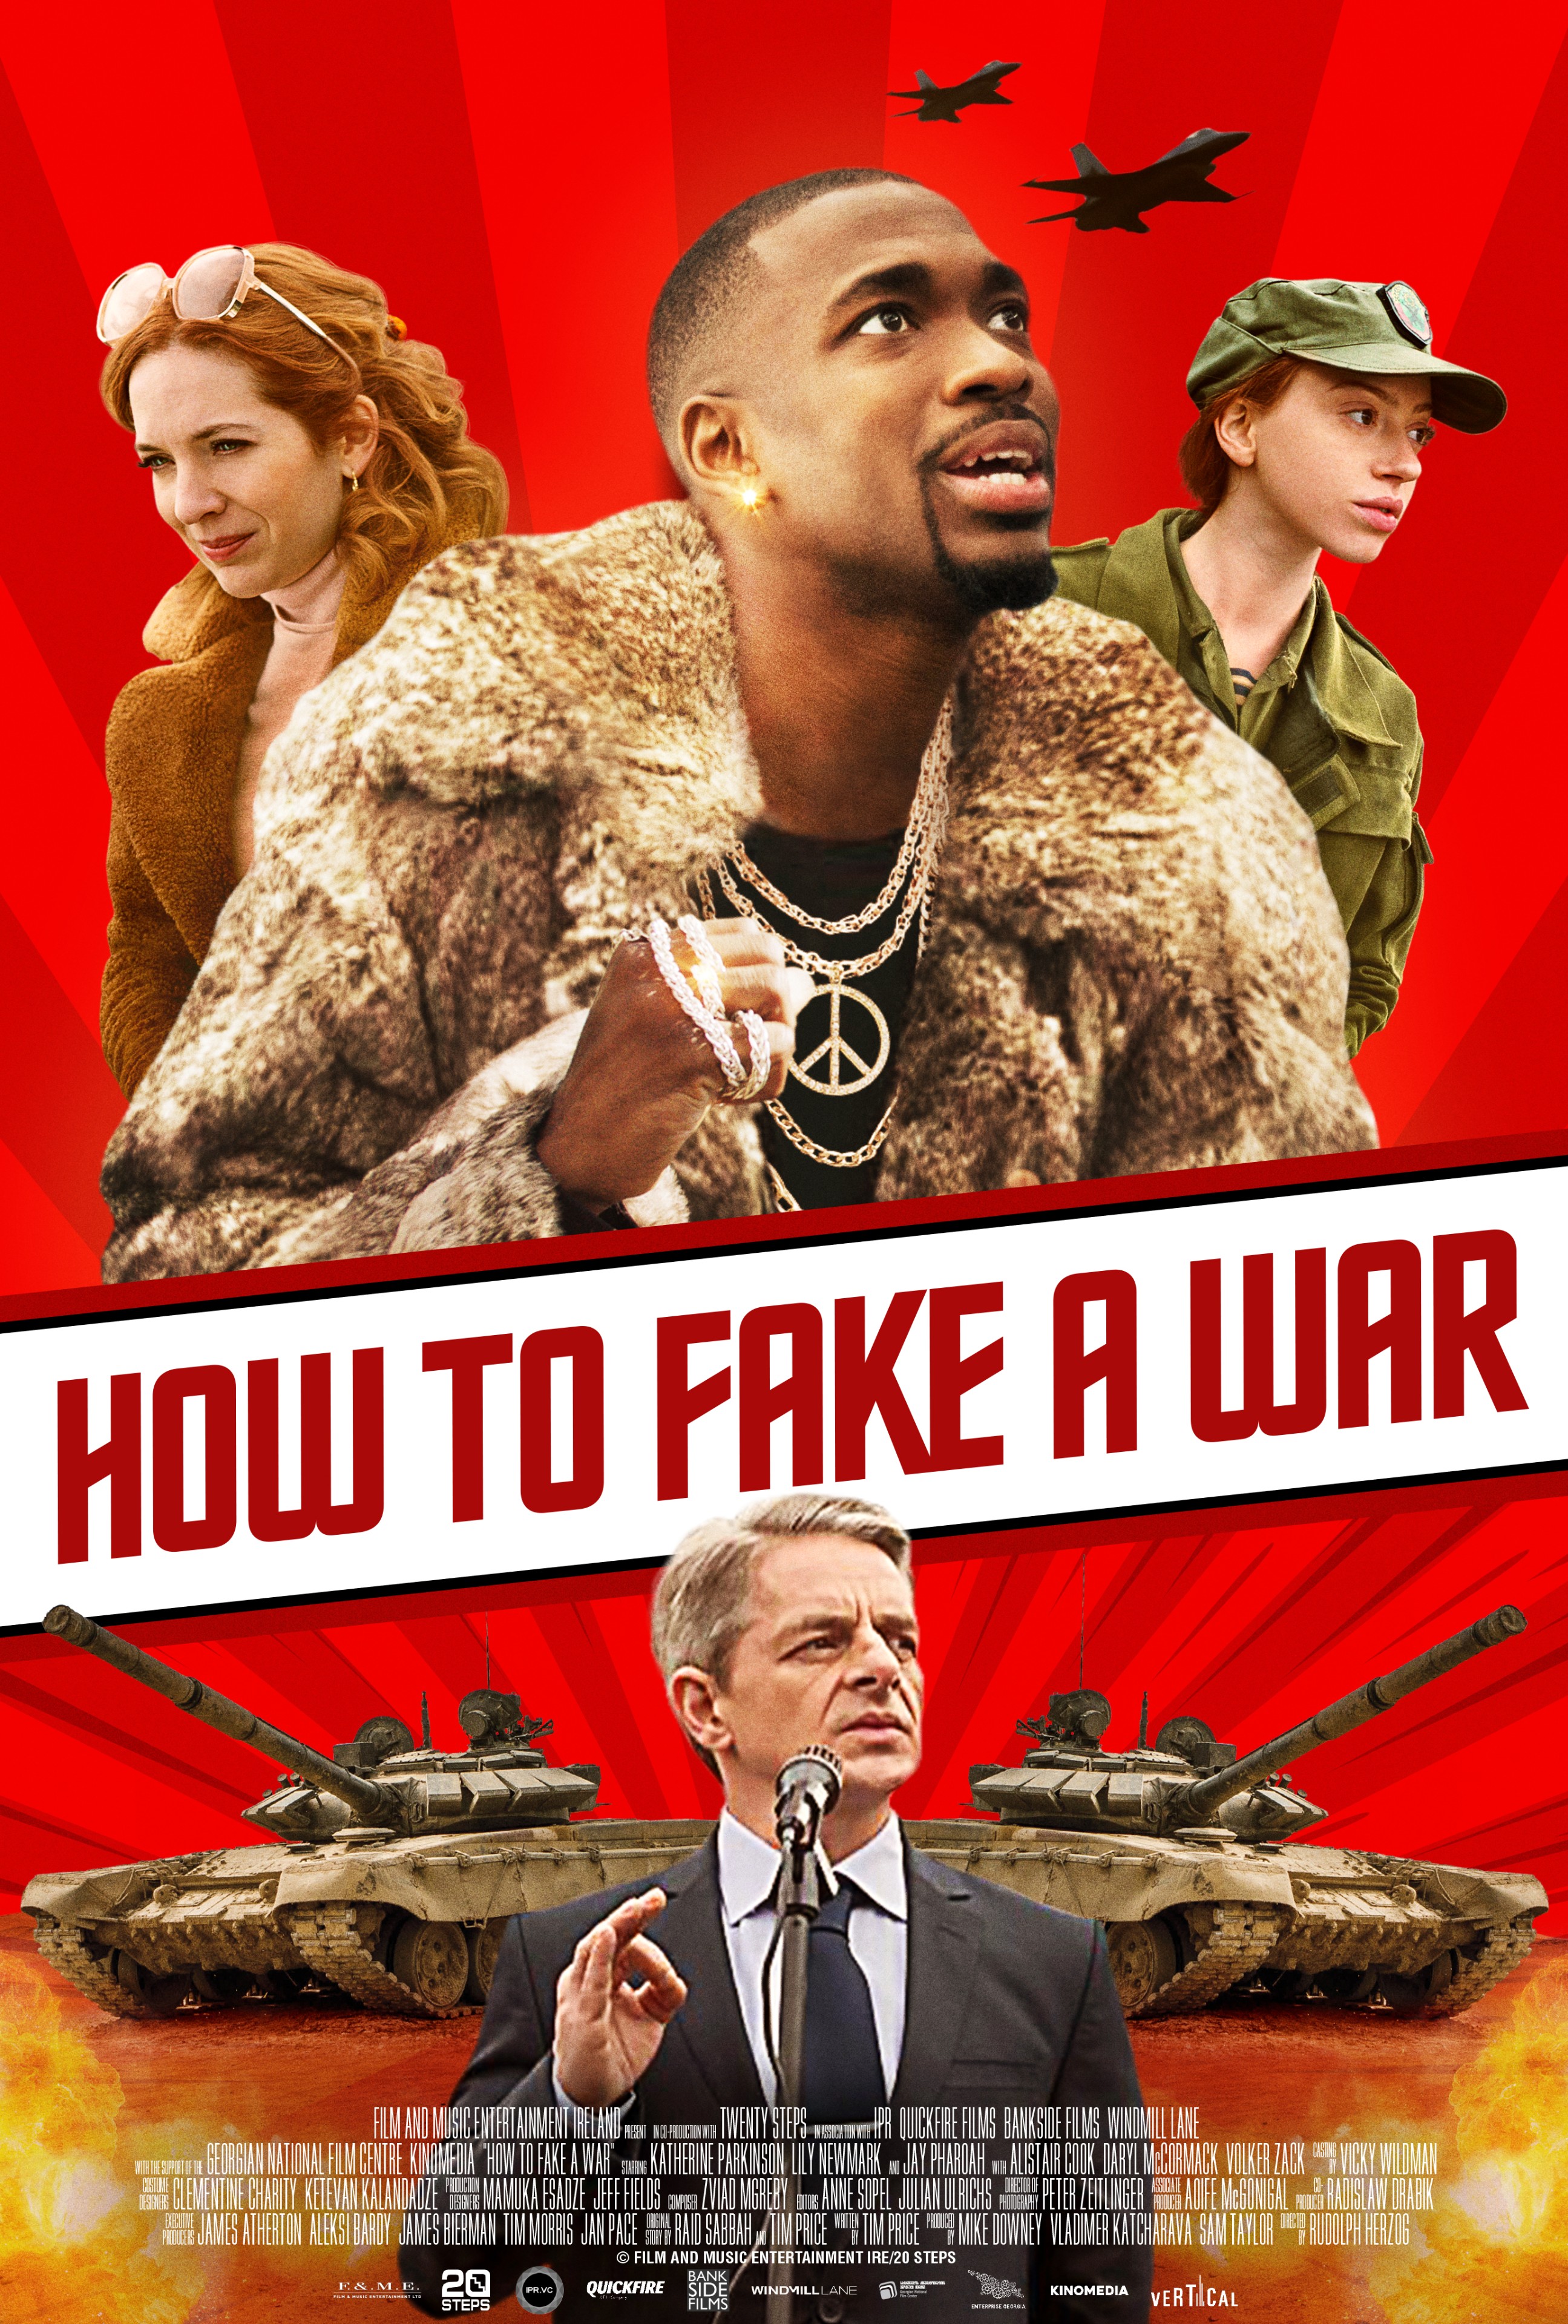 Nonton film How to Fake a War layarkaca21 indoxx1 ganool online streaming terbaru